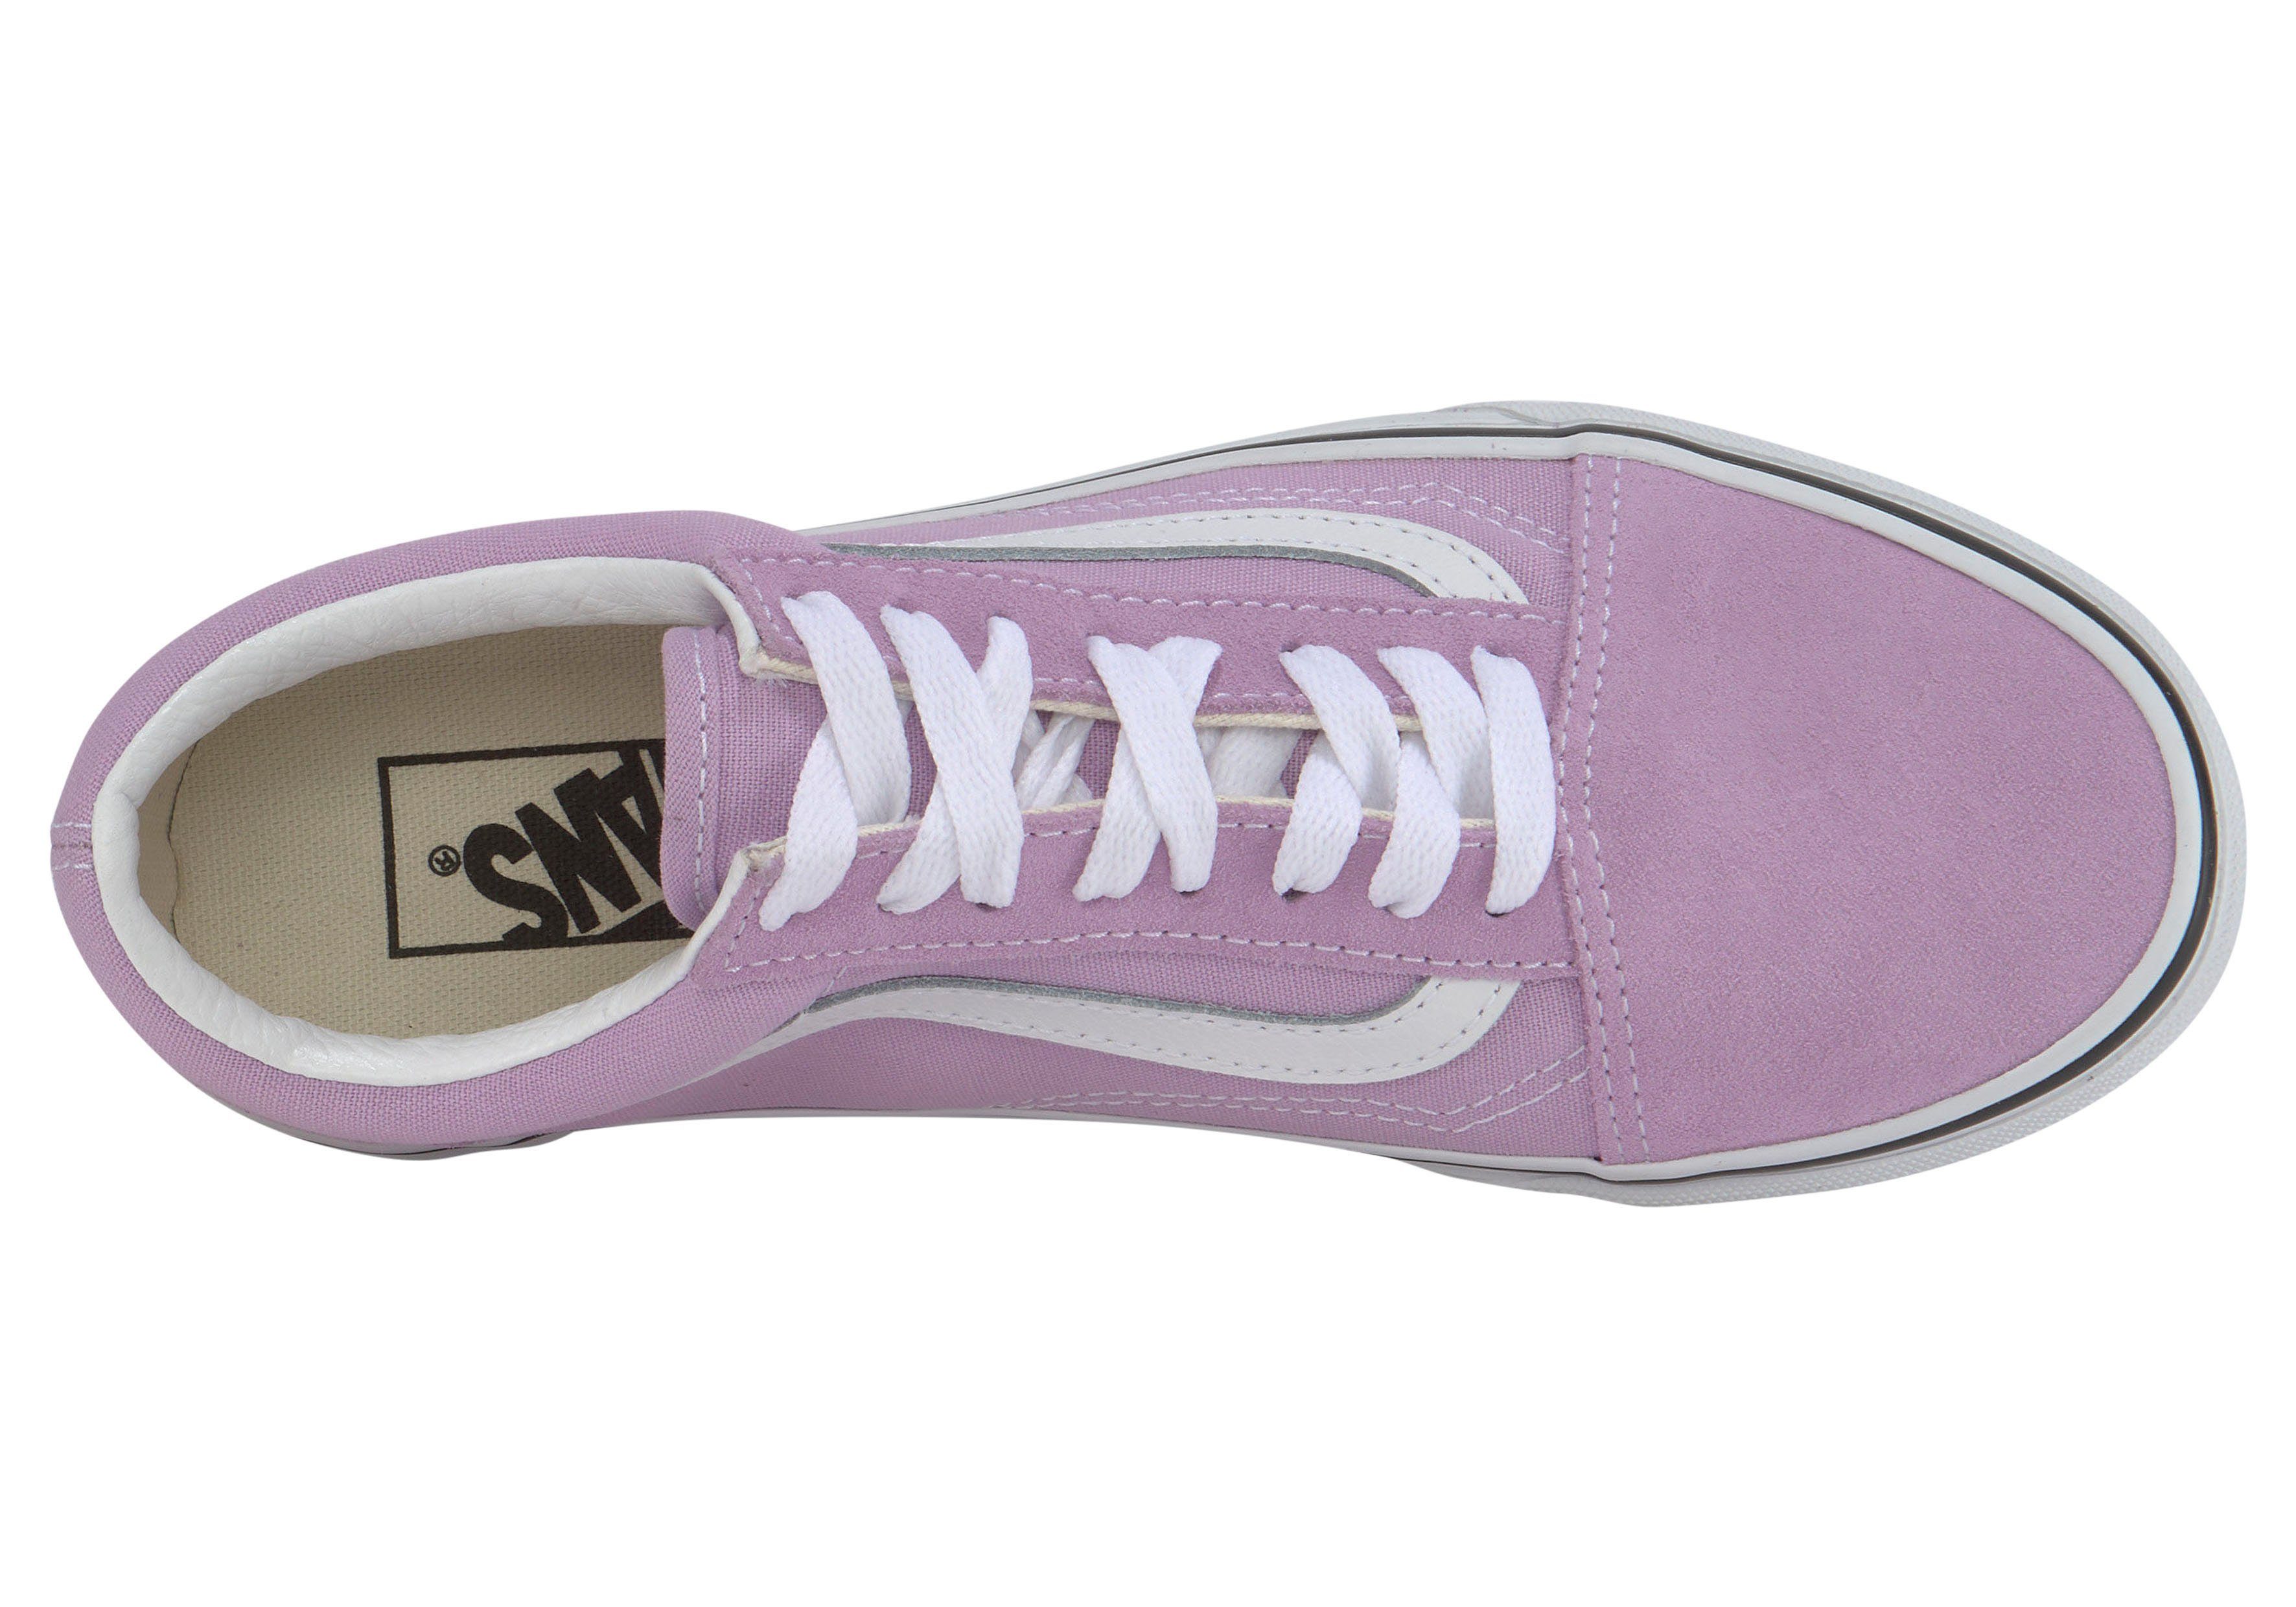 Vans Old Skool Sneaker an mit flieder Ferse Logo der kontrastfarbenem